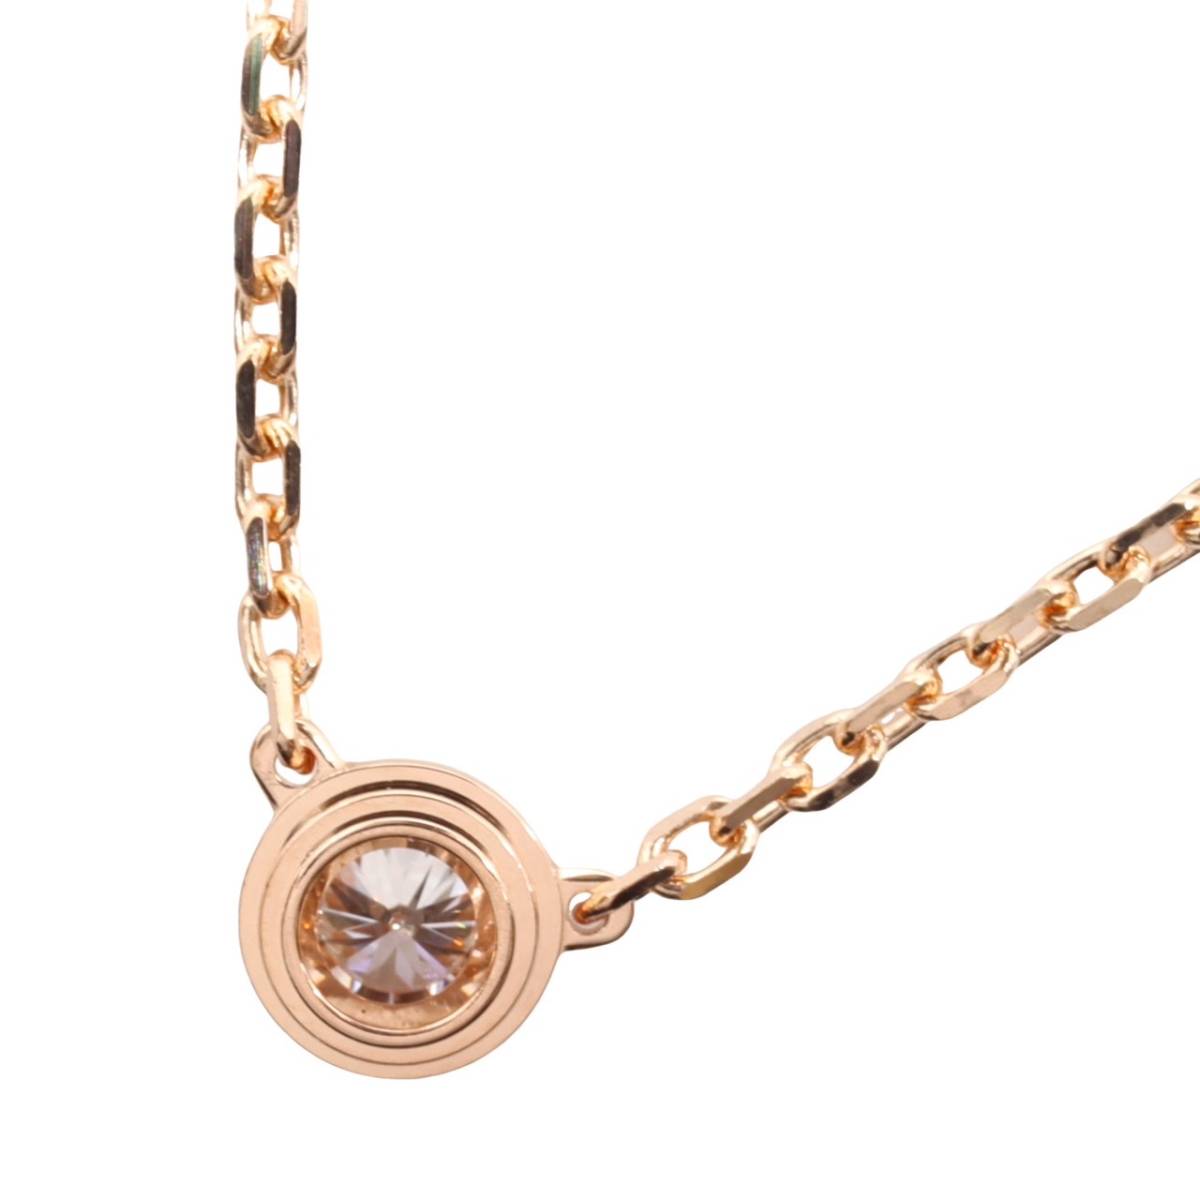 Cartier Cartier 750 K18 PG dam -ru necklace XStia man reje1P diamond pink gold jewelry 